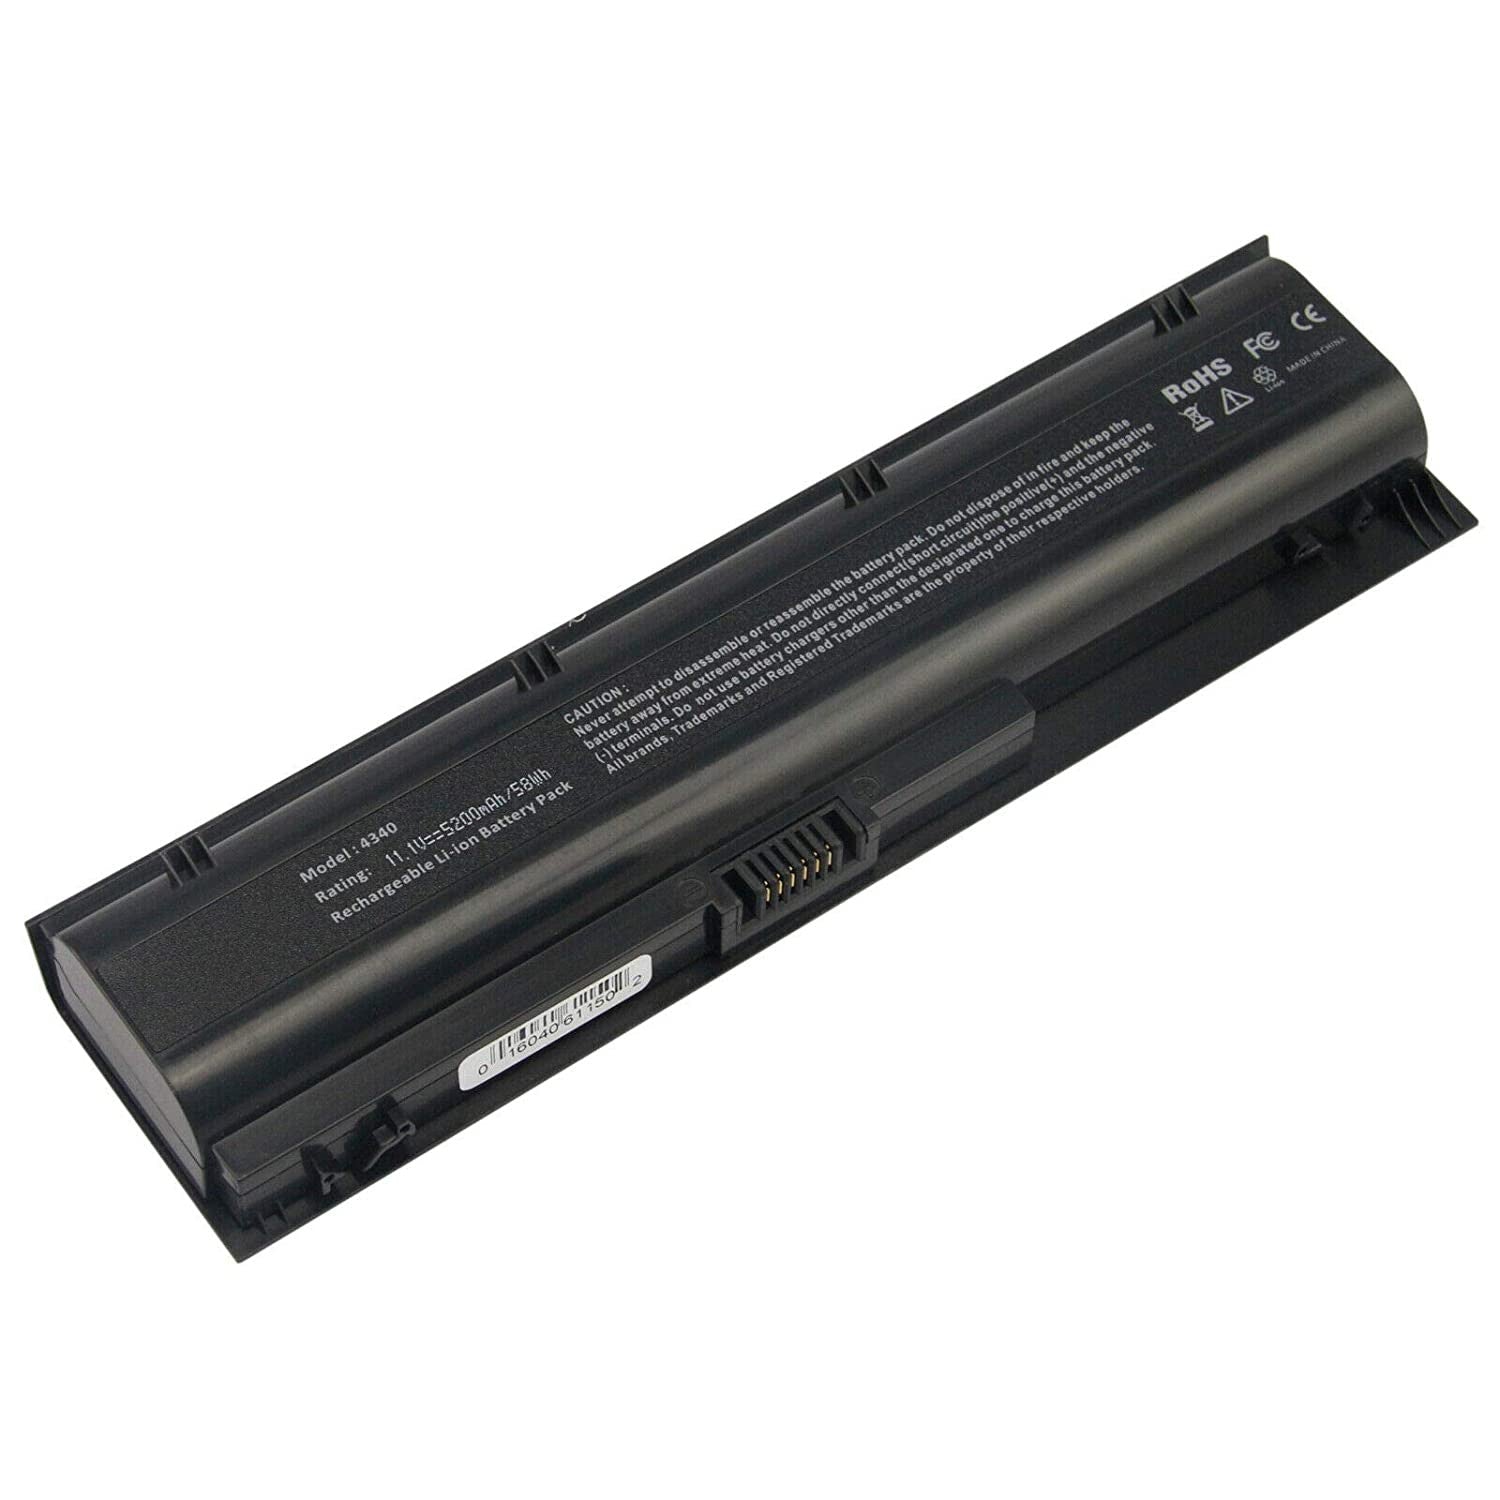 HP 4340S Laptop Battery